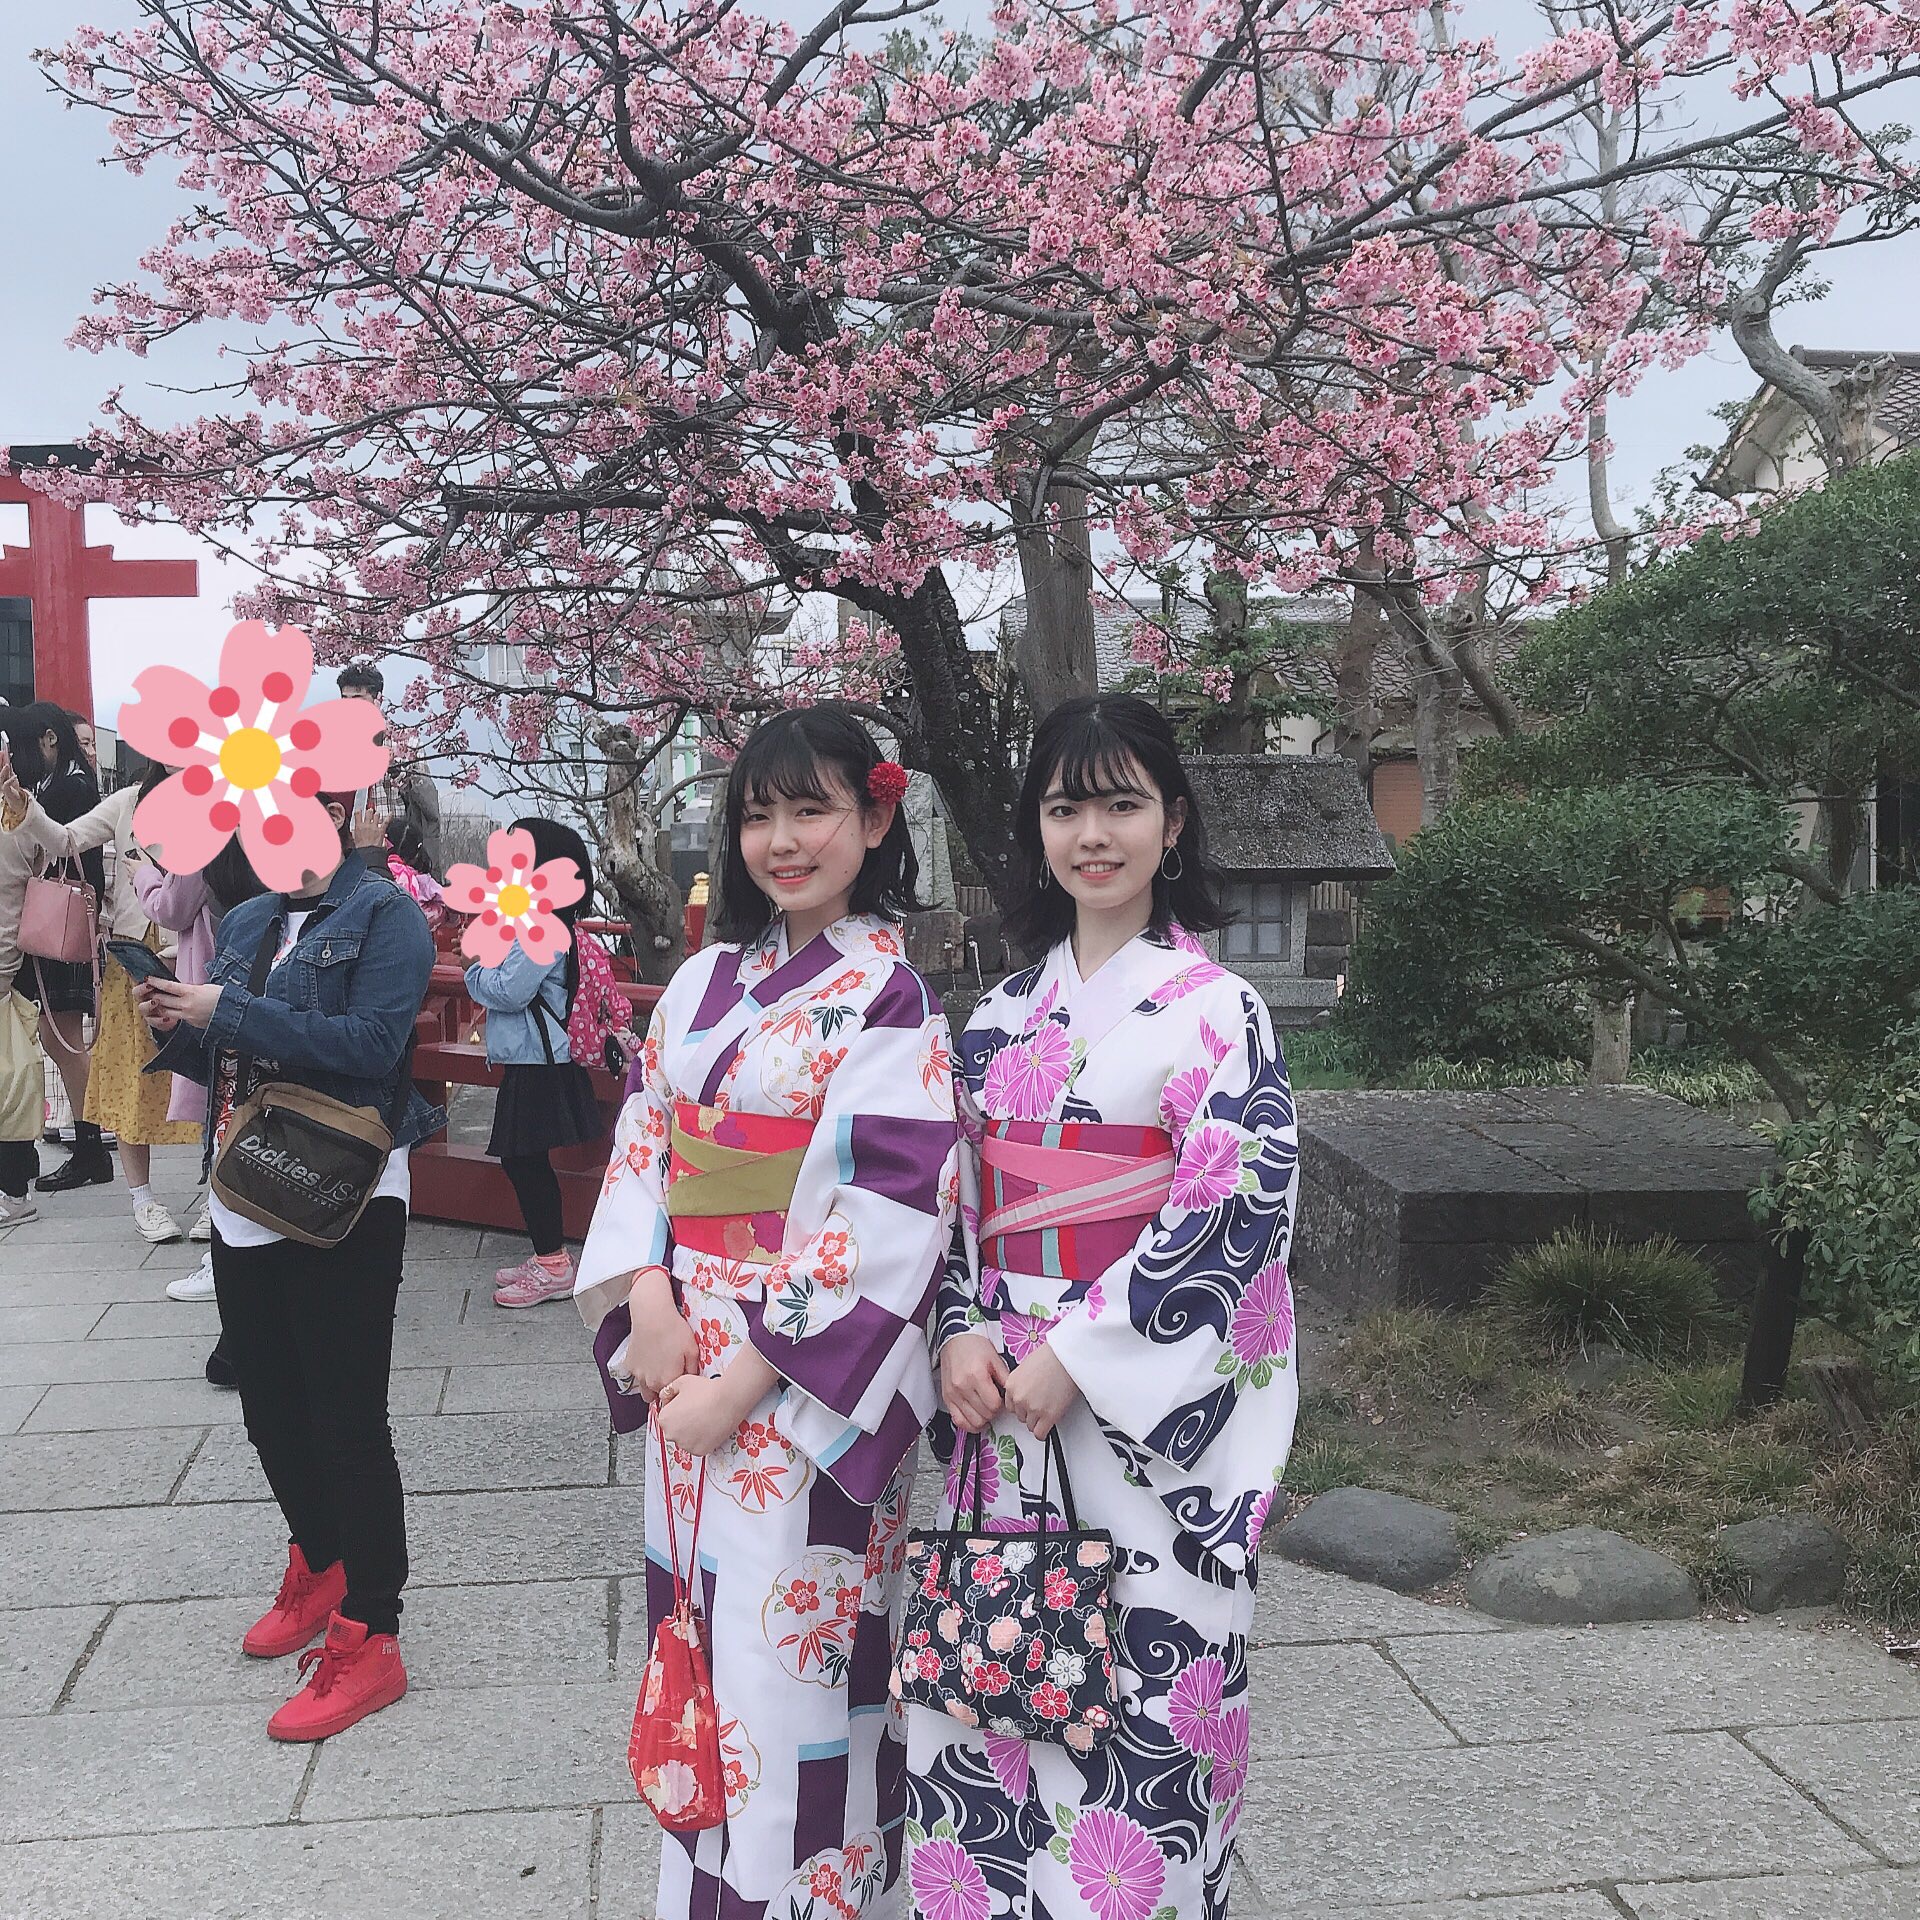 Shop Topics 可愛い格好で 鎌倉で着物 浴衣を楽しむなら 着物レンタルvasara